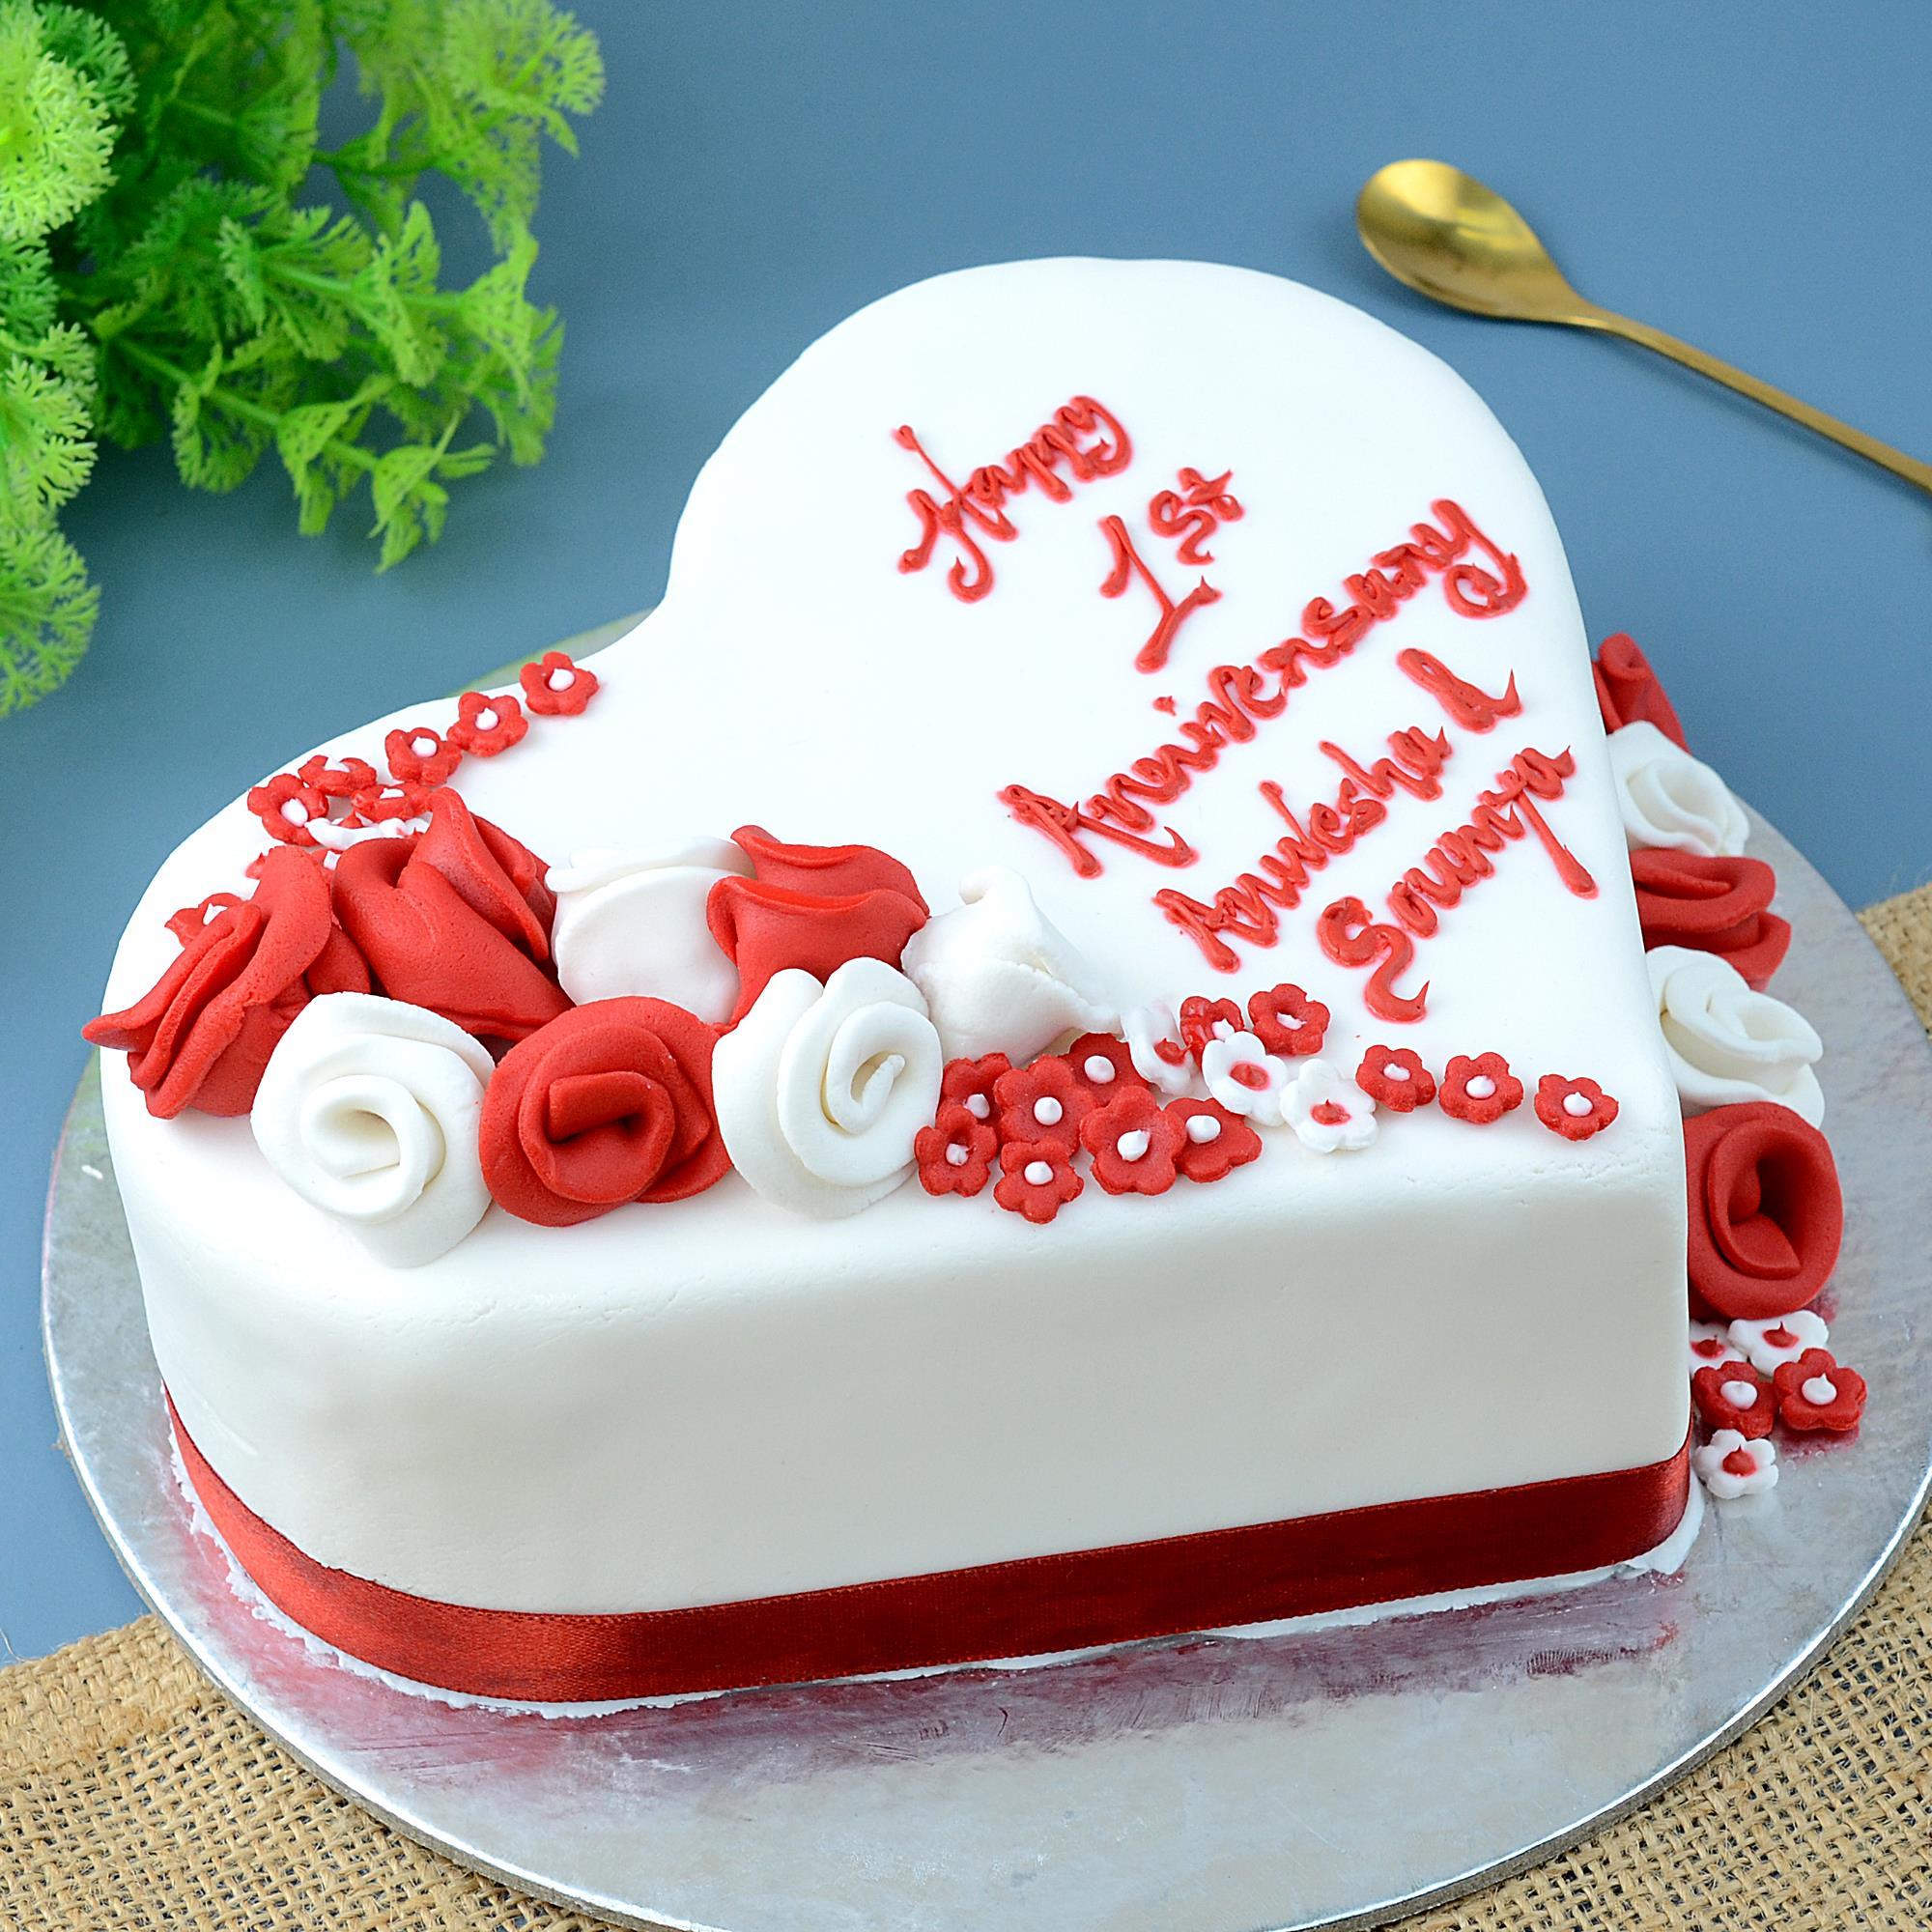 PAWAN HEART BIRTHDAY CAKE - Rashmi's Bakery